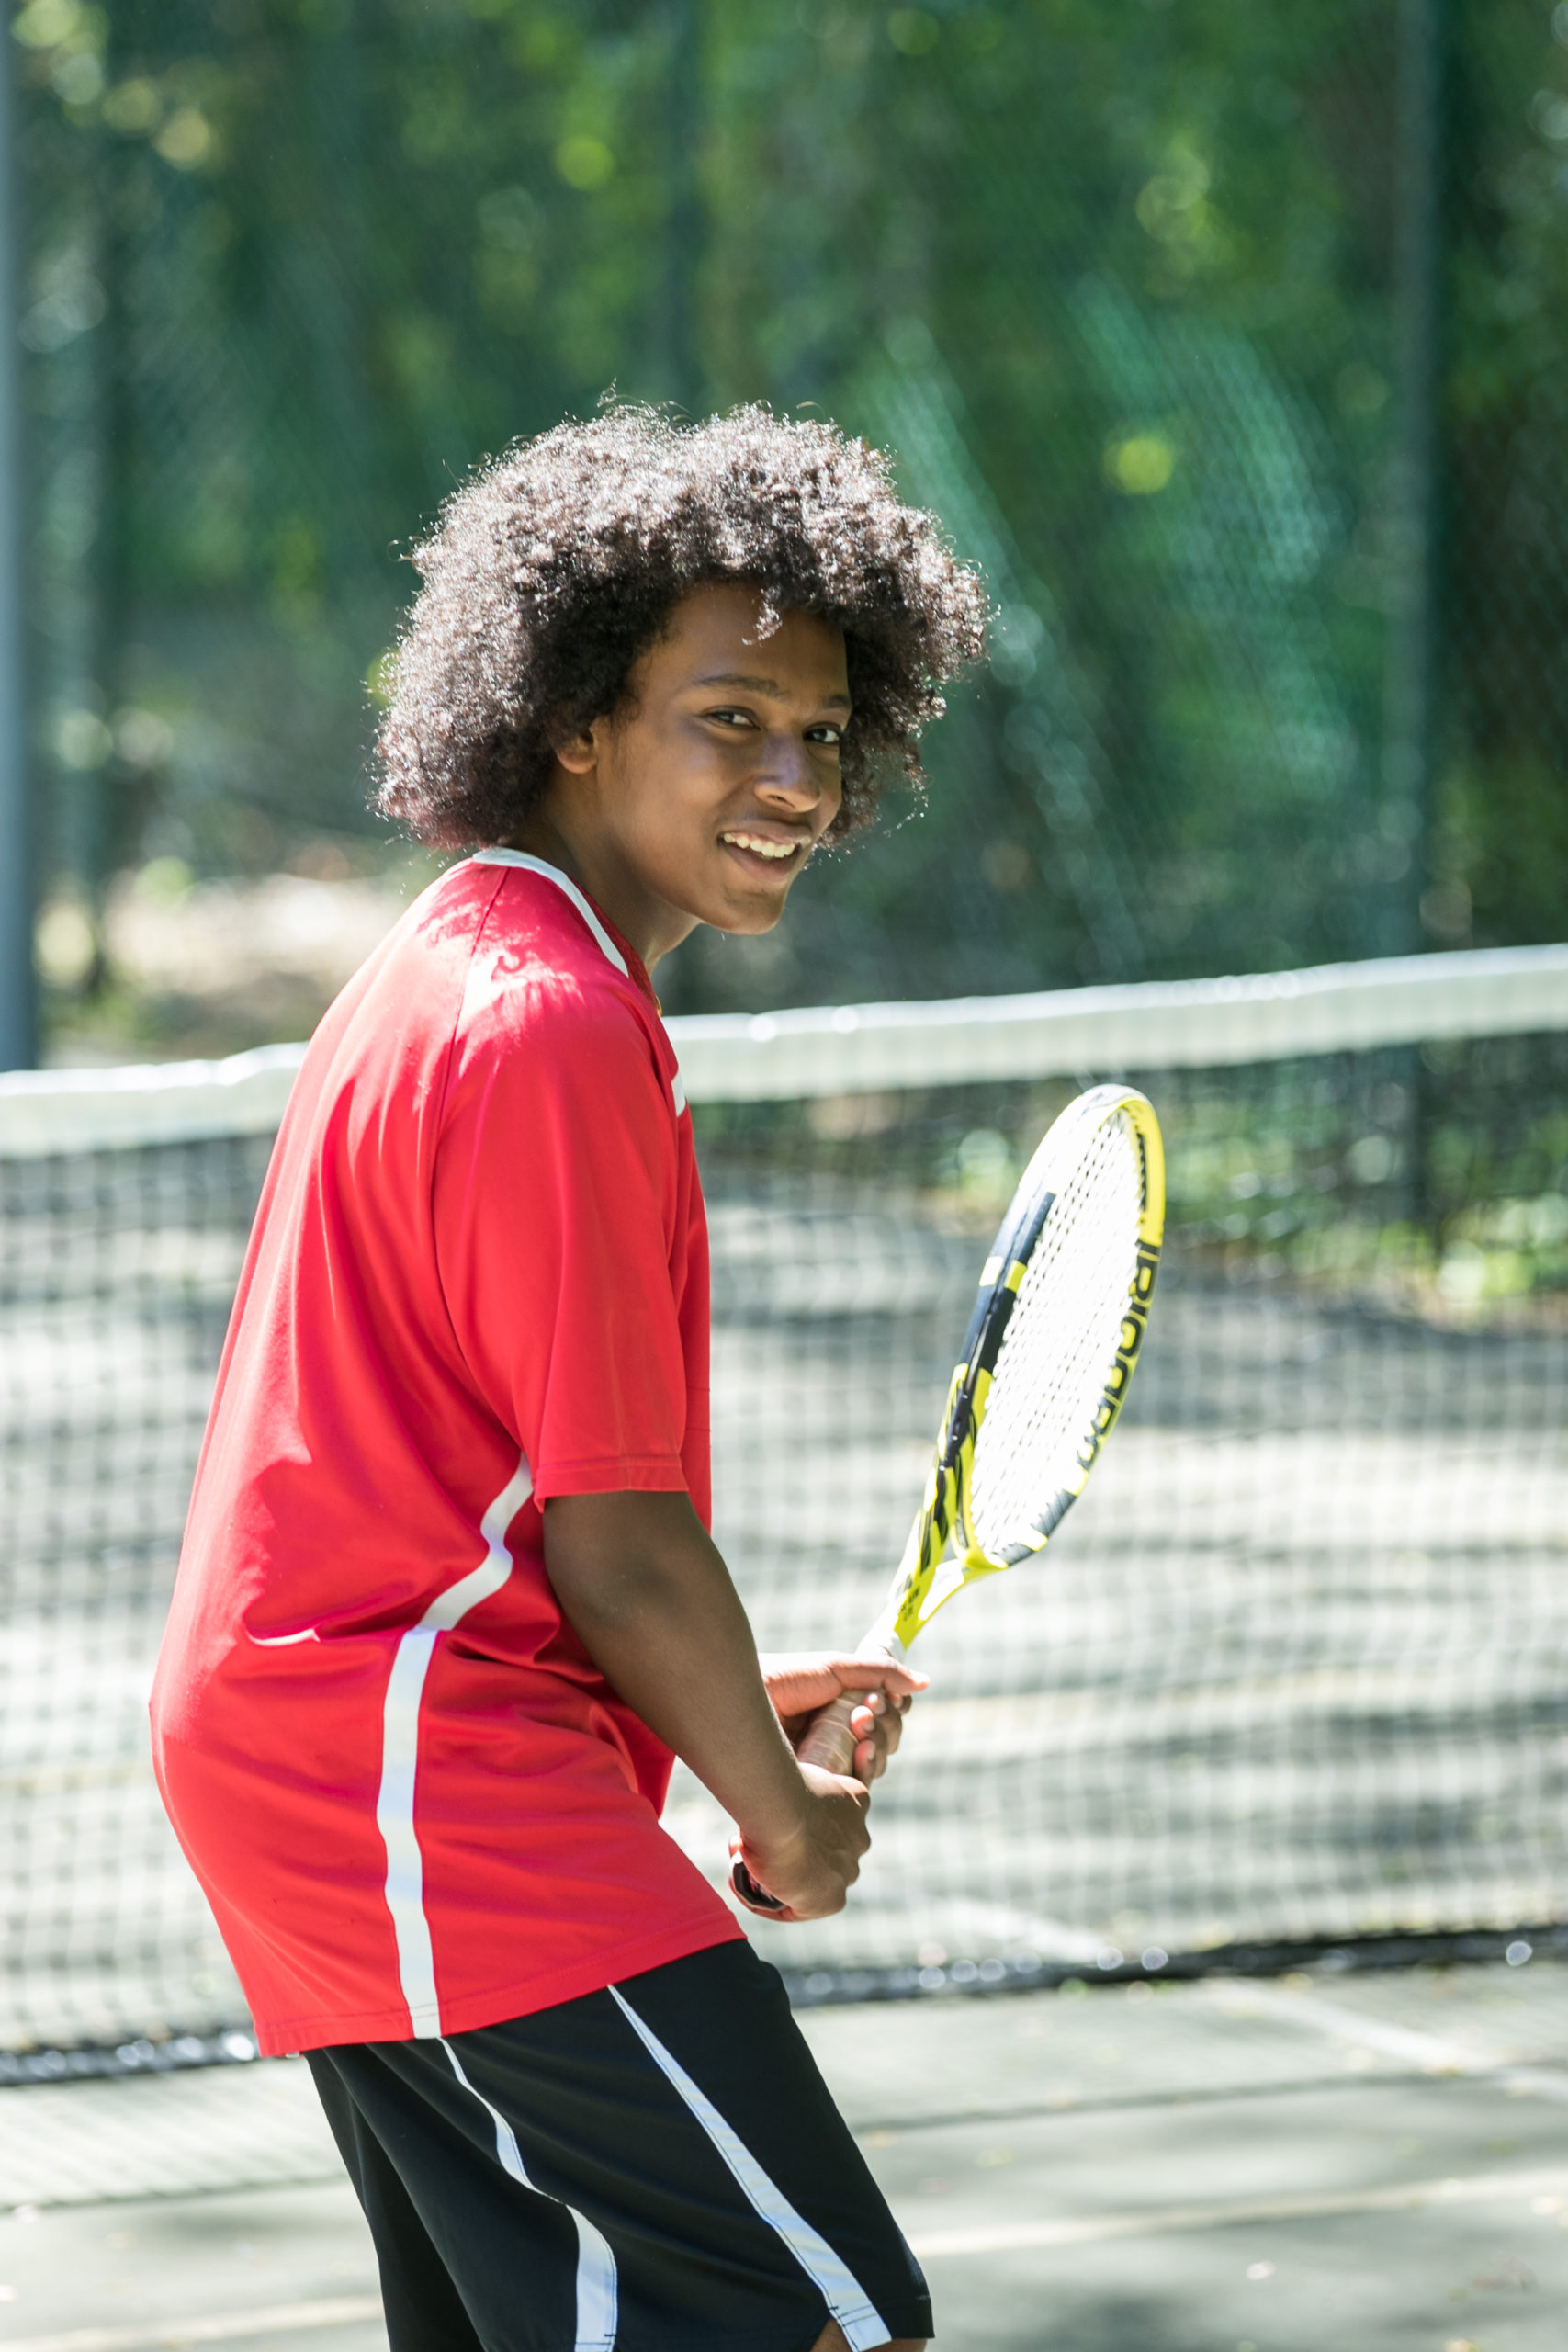 boys tennis player posing with racket